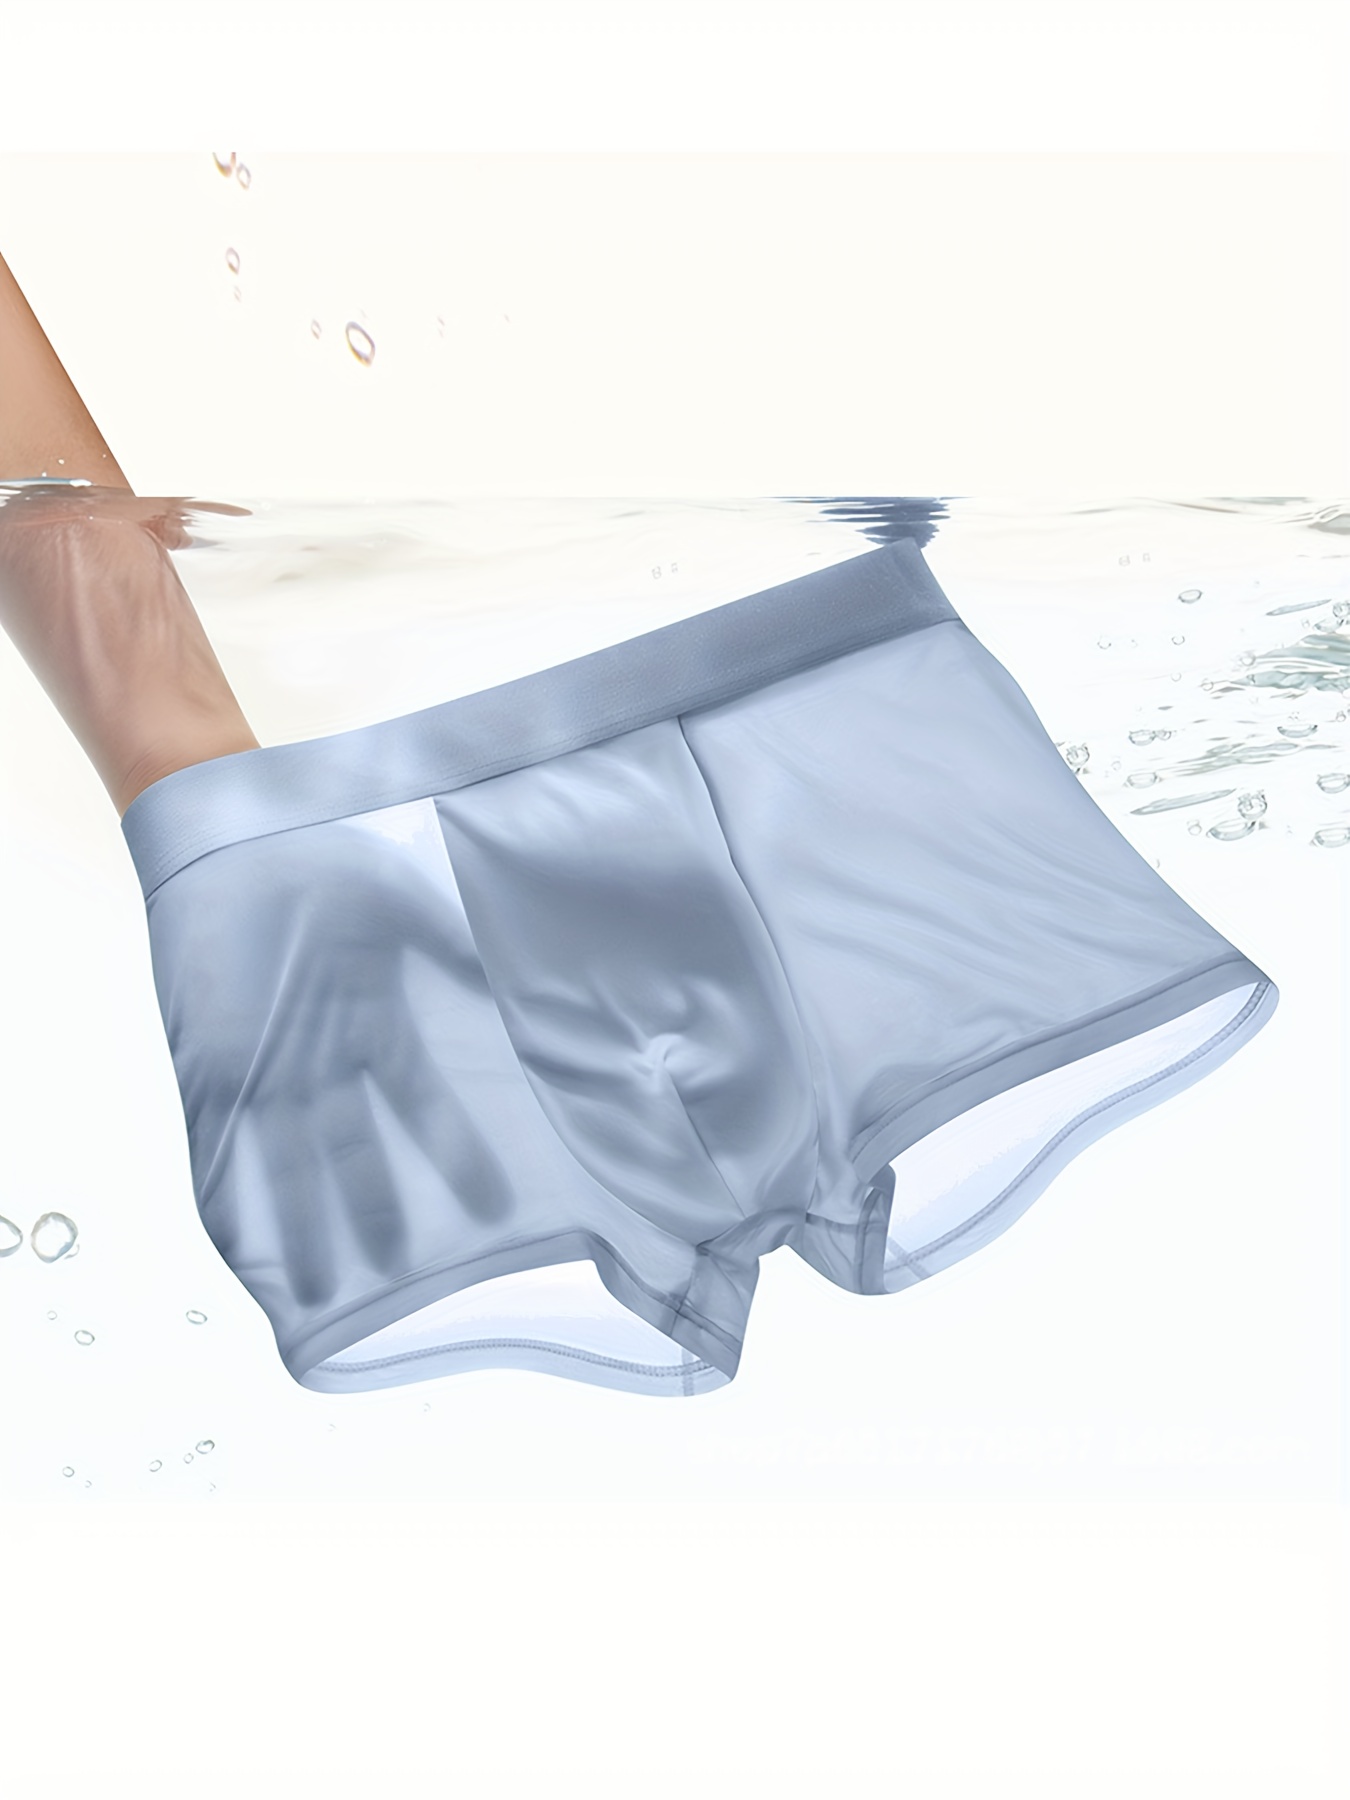 GOLDP 5PCS Ultra-Thin Non-Marking Ice Silk Underwear, Womens